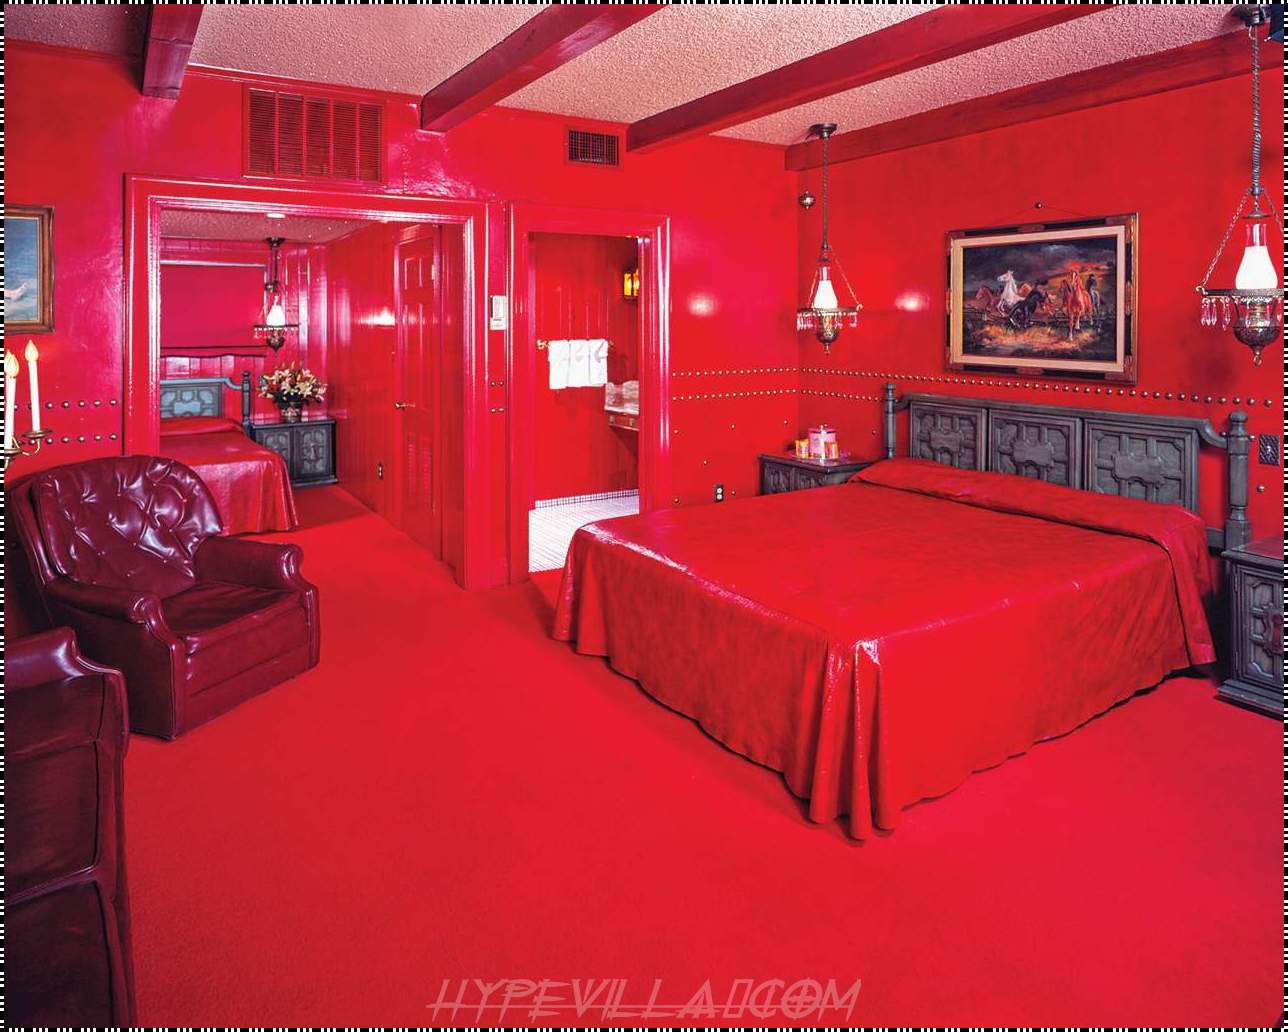 Включи red room. Ред рум. Red Room" красная комната  (1999) ужасы ". Комната в красных тонах. Комната с красными стенами.